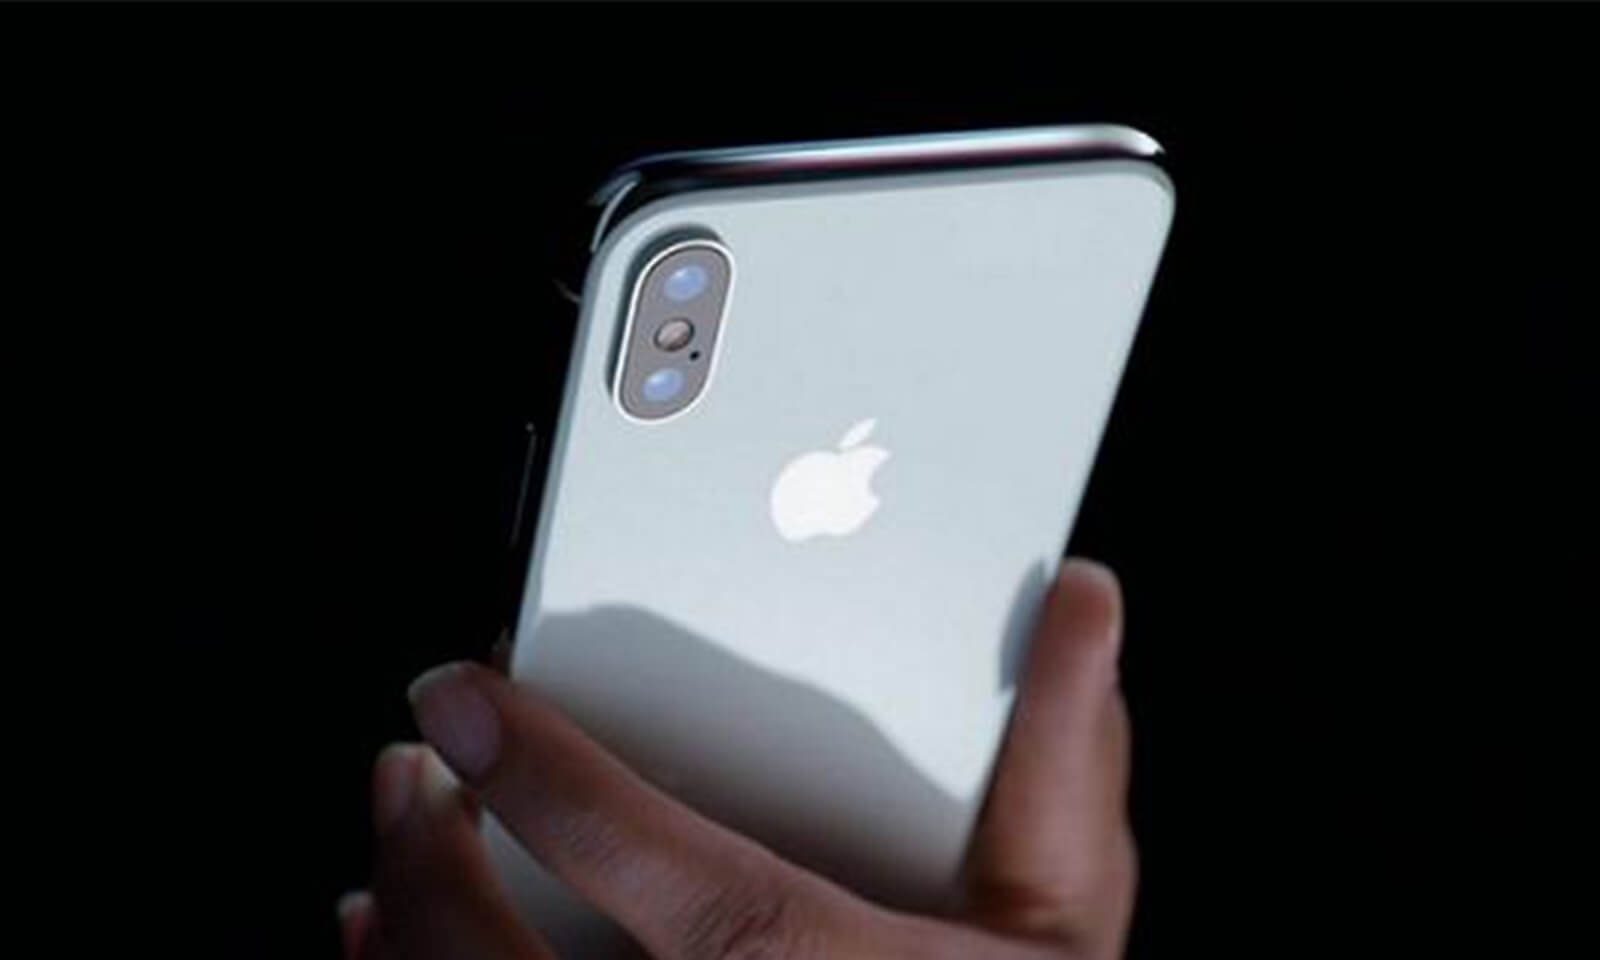 Huawei Mate 20 trang bị chip Kirin 980 “đả bại” iPhone X?